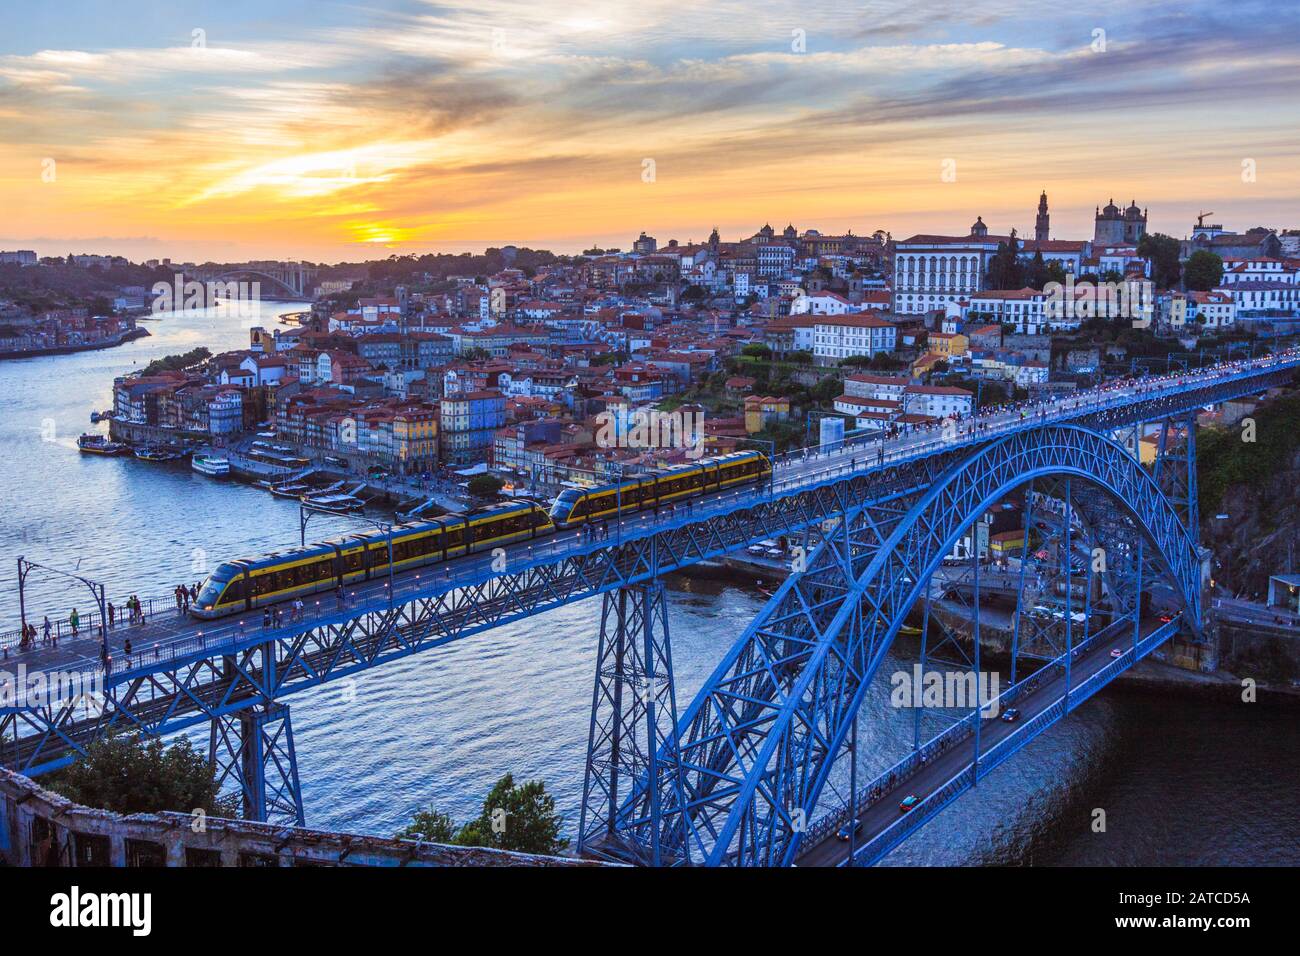 Porto, Portugal : A train rides at sunset on the Dom Luis I Bridge over the River Douro linking Porto and Vila Nova de Gaia, built betwen 1881 and 188 Stock Photo